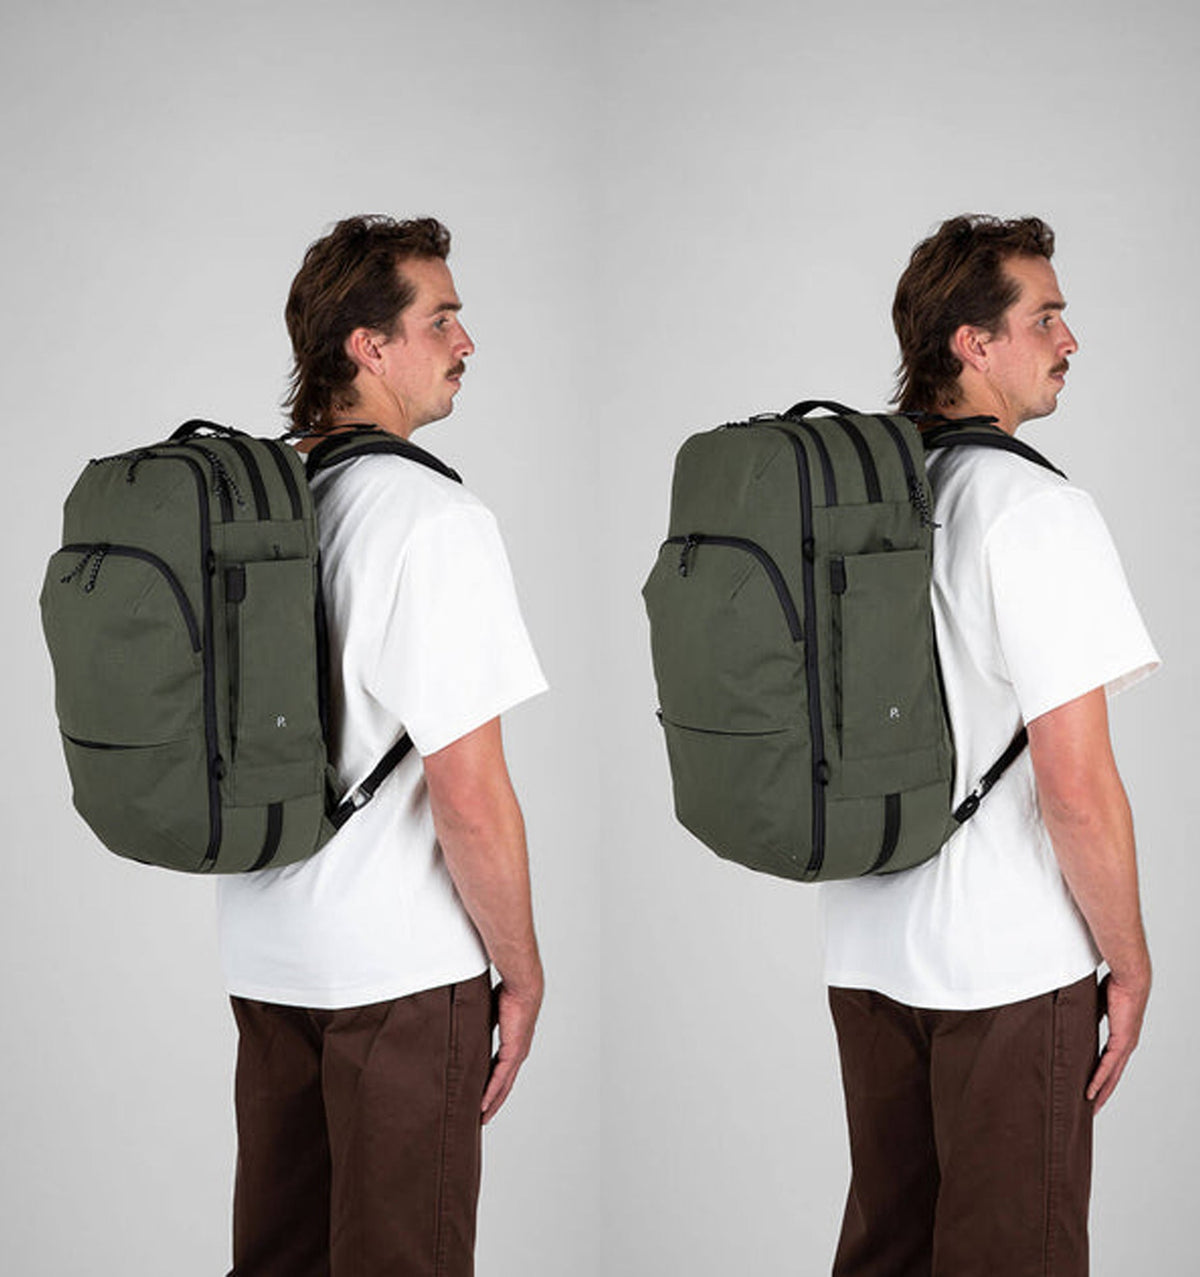 Pakt 16" Travel Backpack V2 45L - Forest